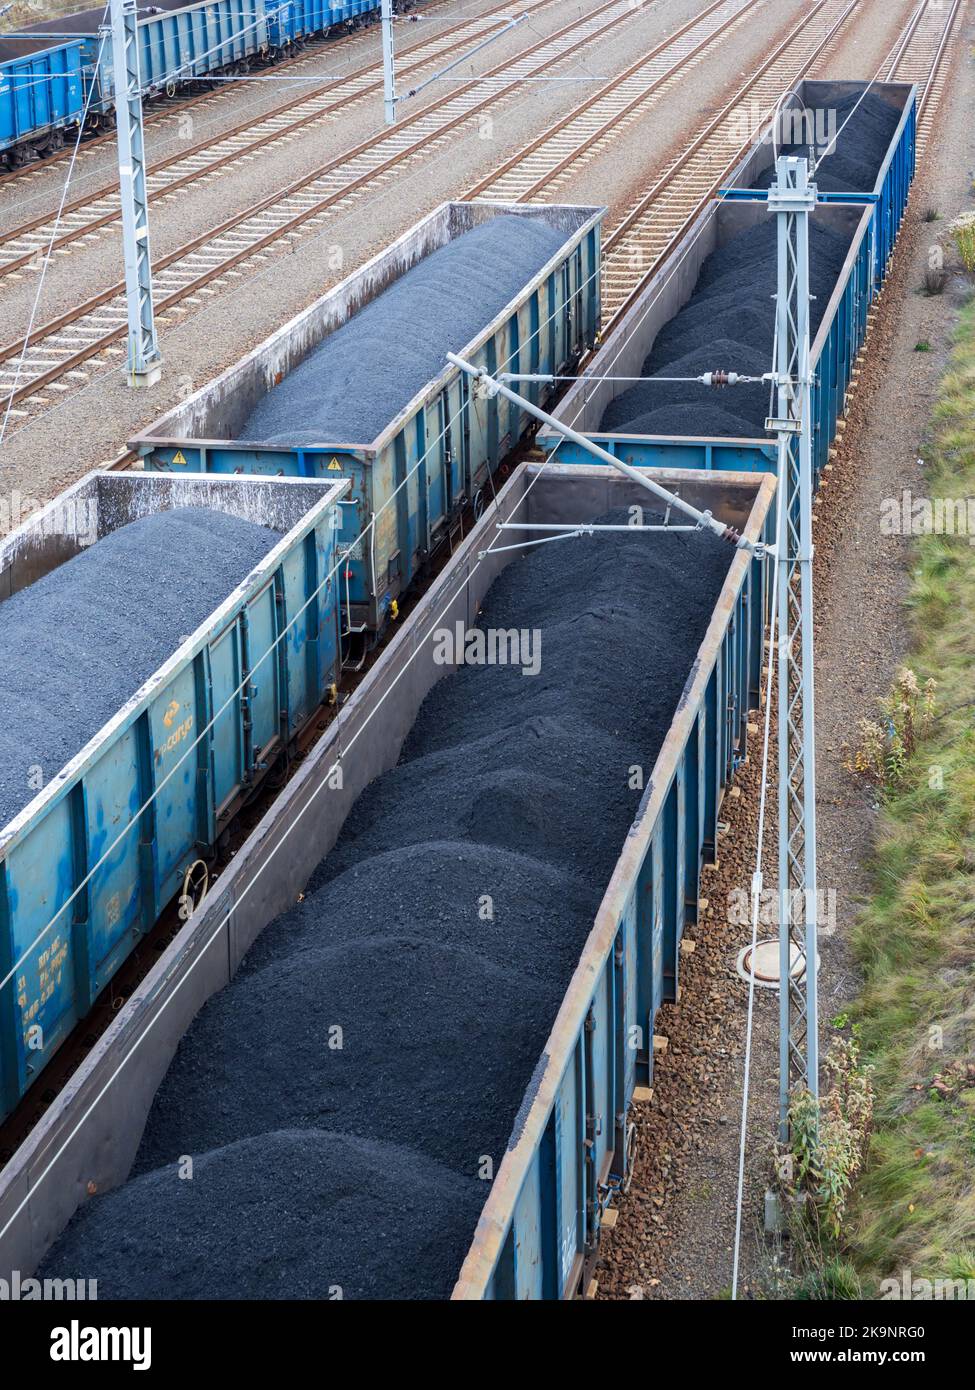 Pologne, Varsovie - wagons de chemin de fer remplis de charbon. Transport de charbon par chemin de fer. Banque D'Images